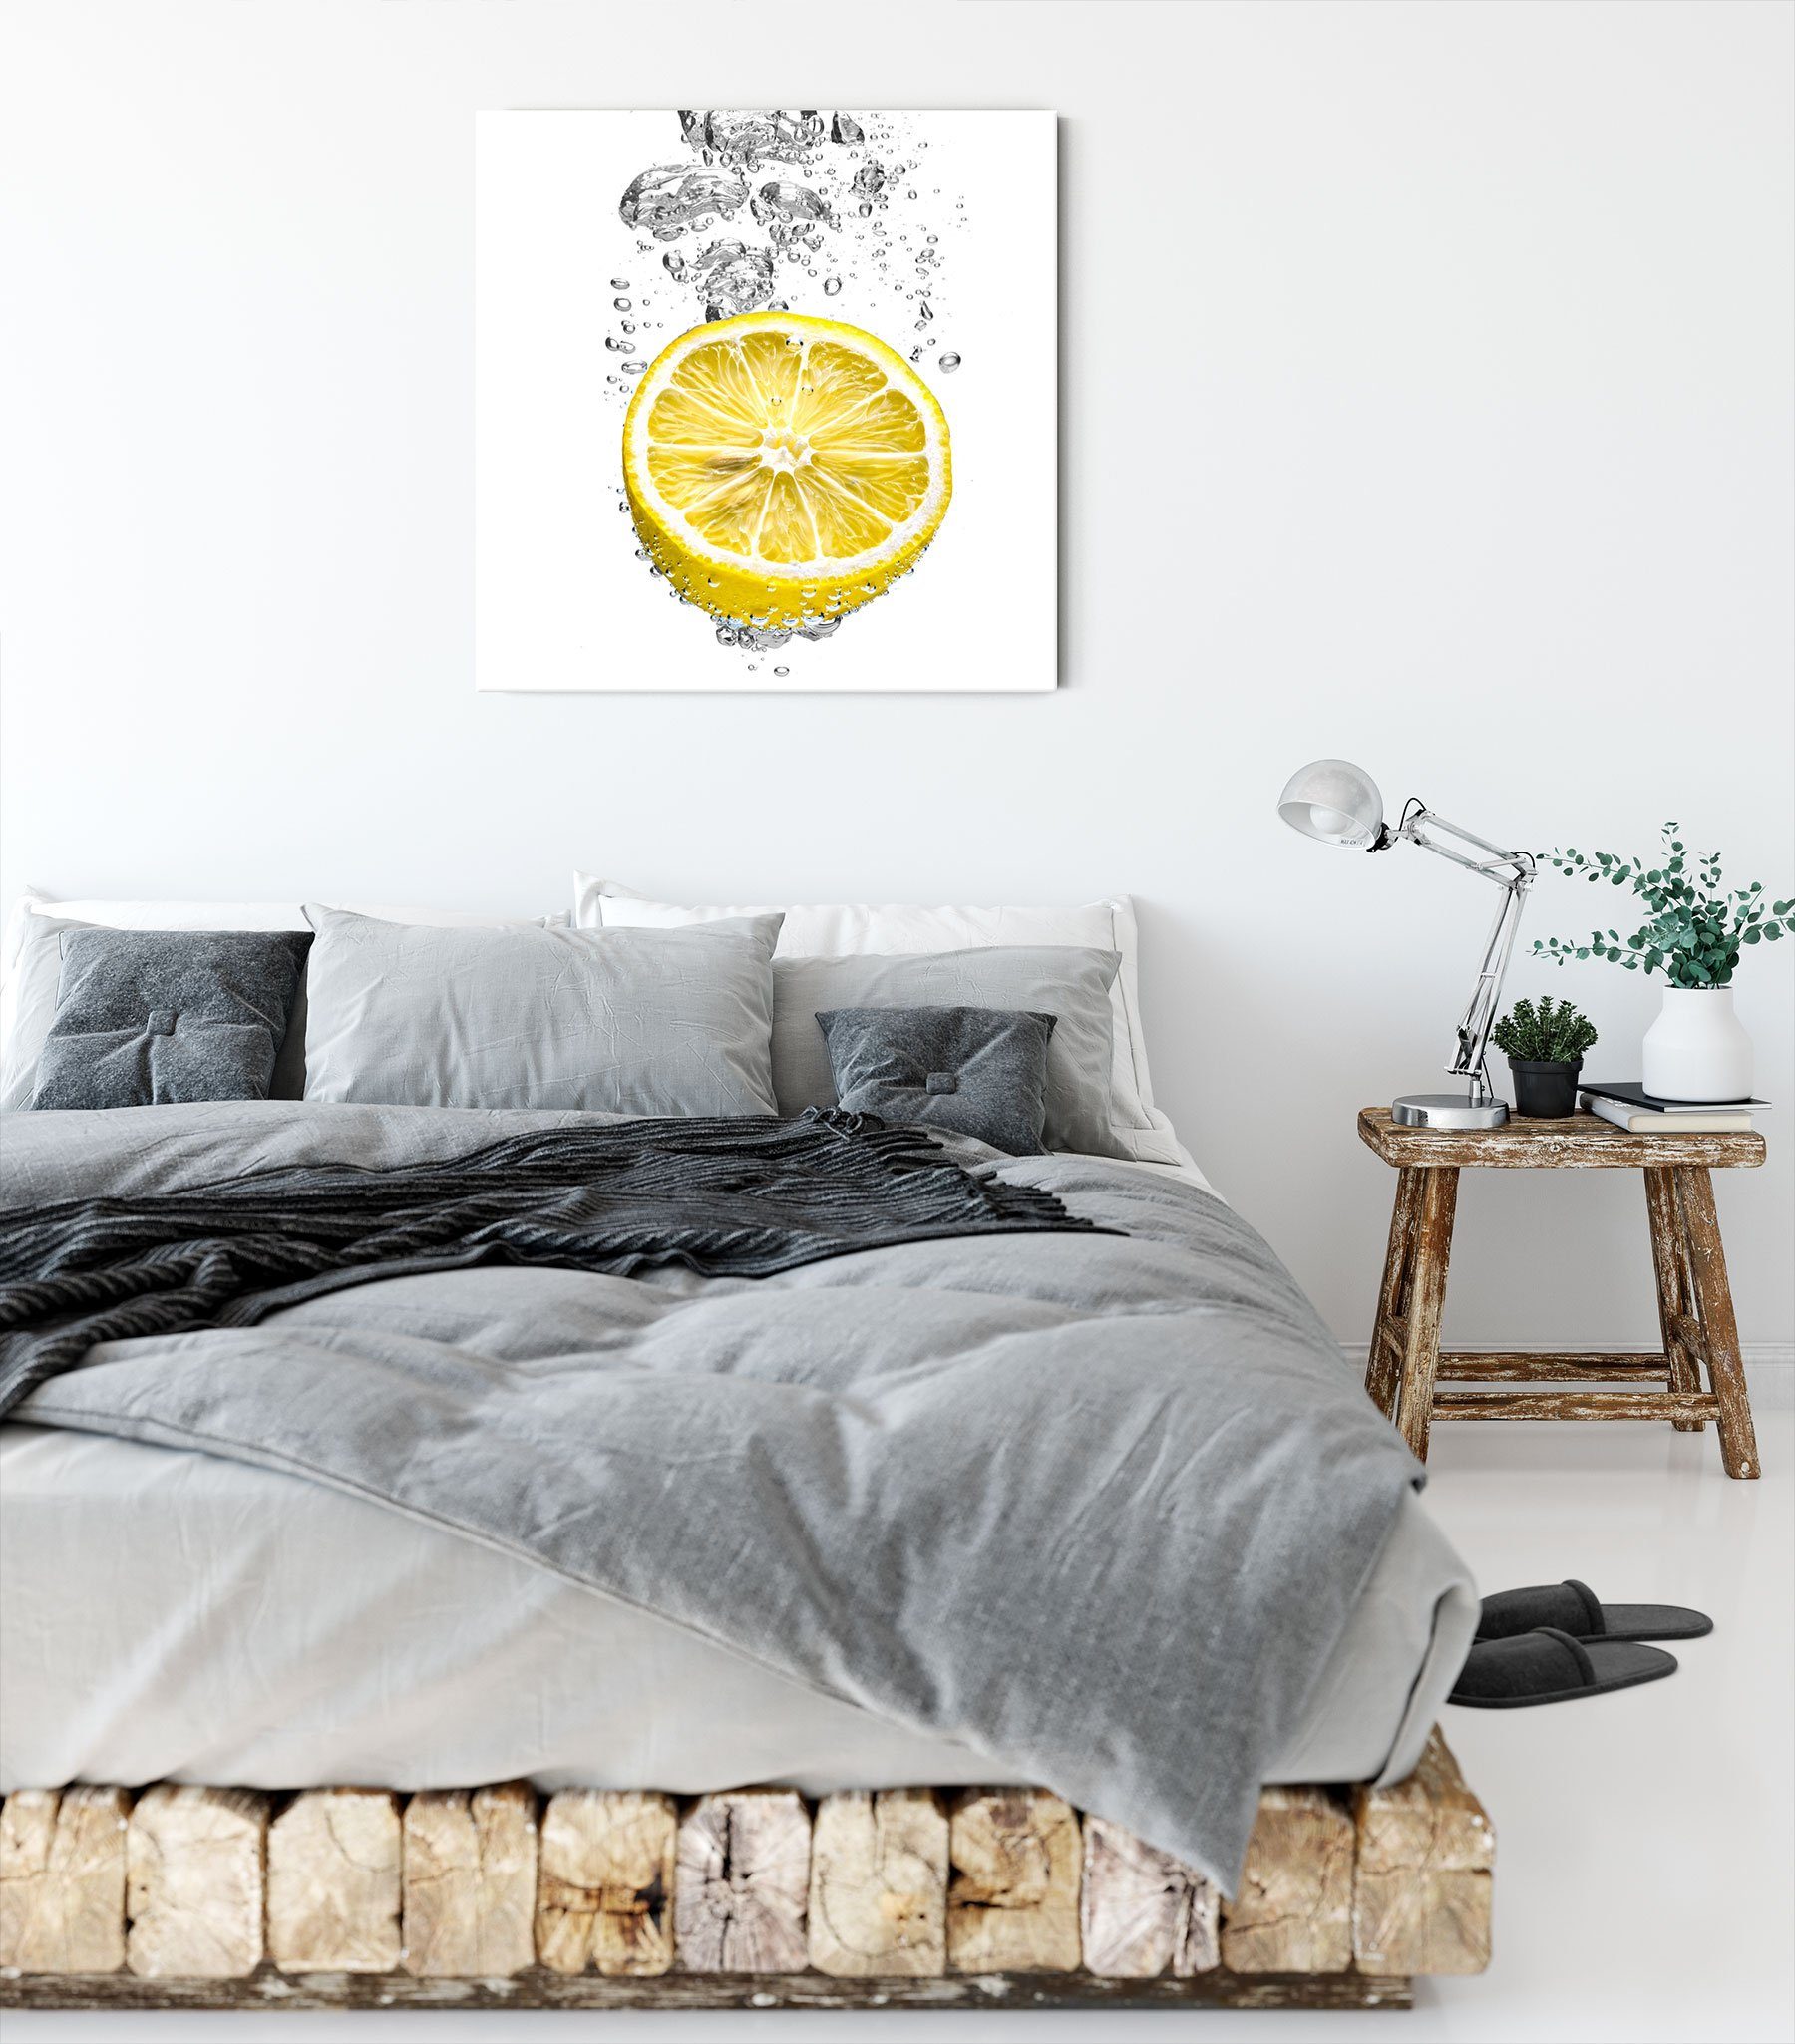 Pixxprint Leinwandbild ins Wasser Zitrone Zitrone, Leinwandbild bespannt, Wasser gefallene ins (1 St), fertig inkl. gefallene Zackenaufhänger